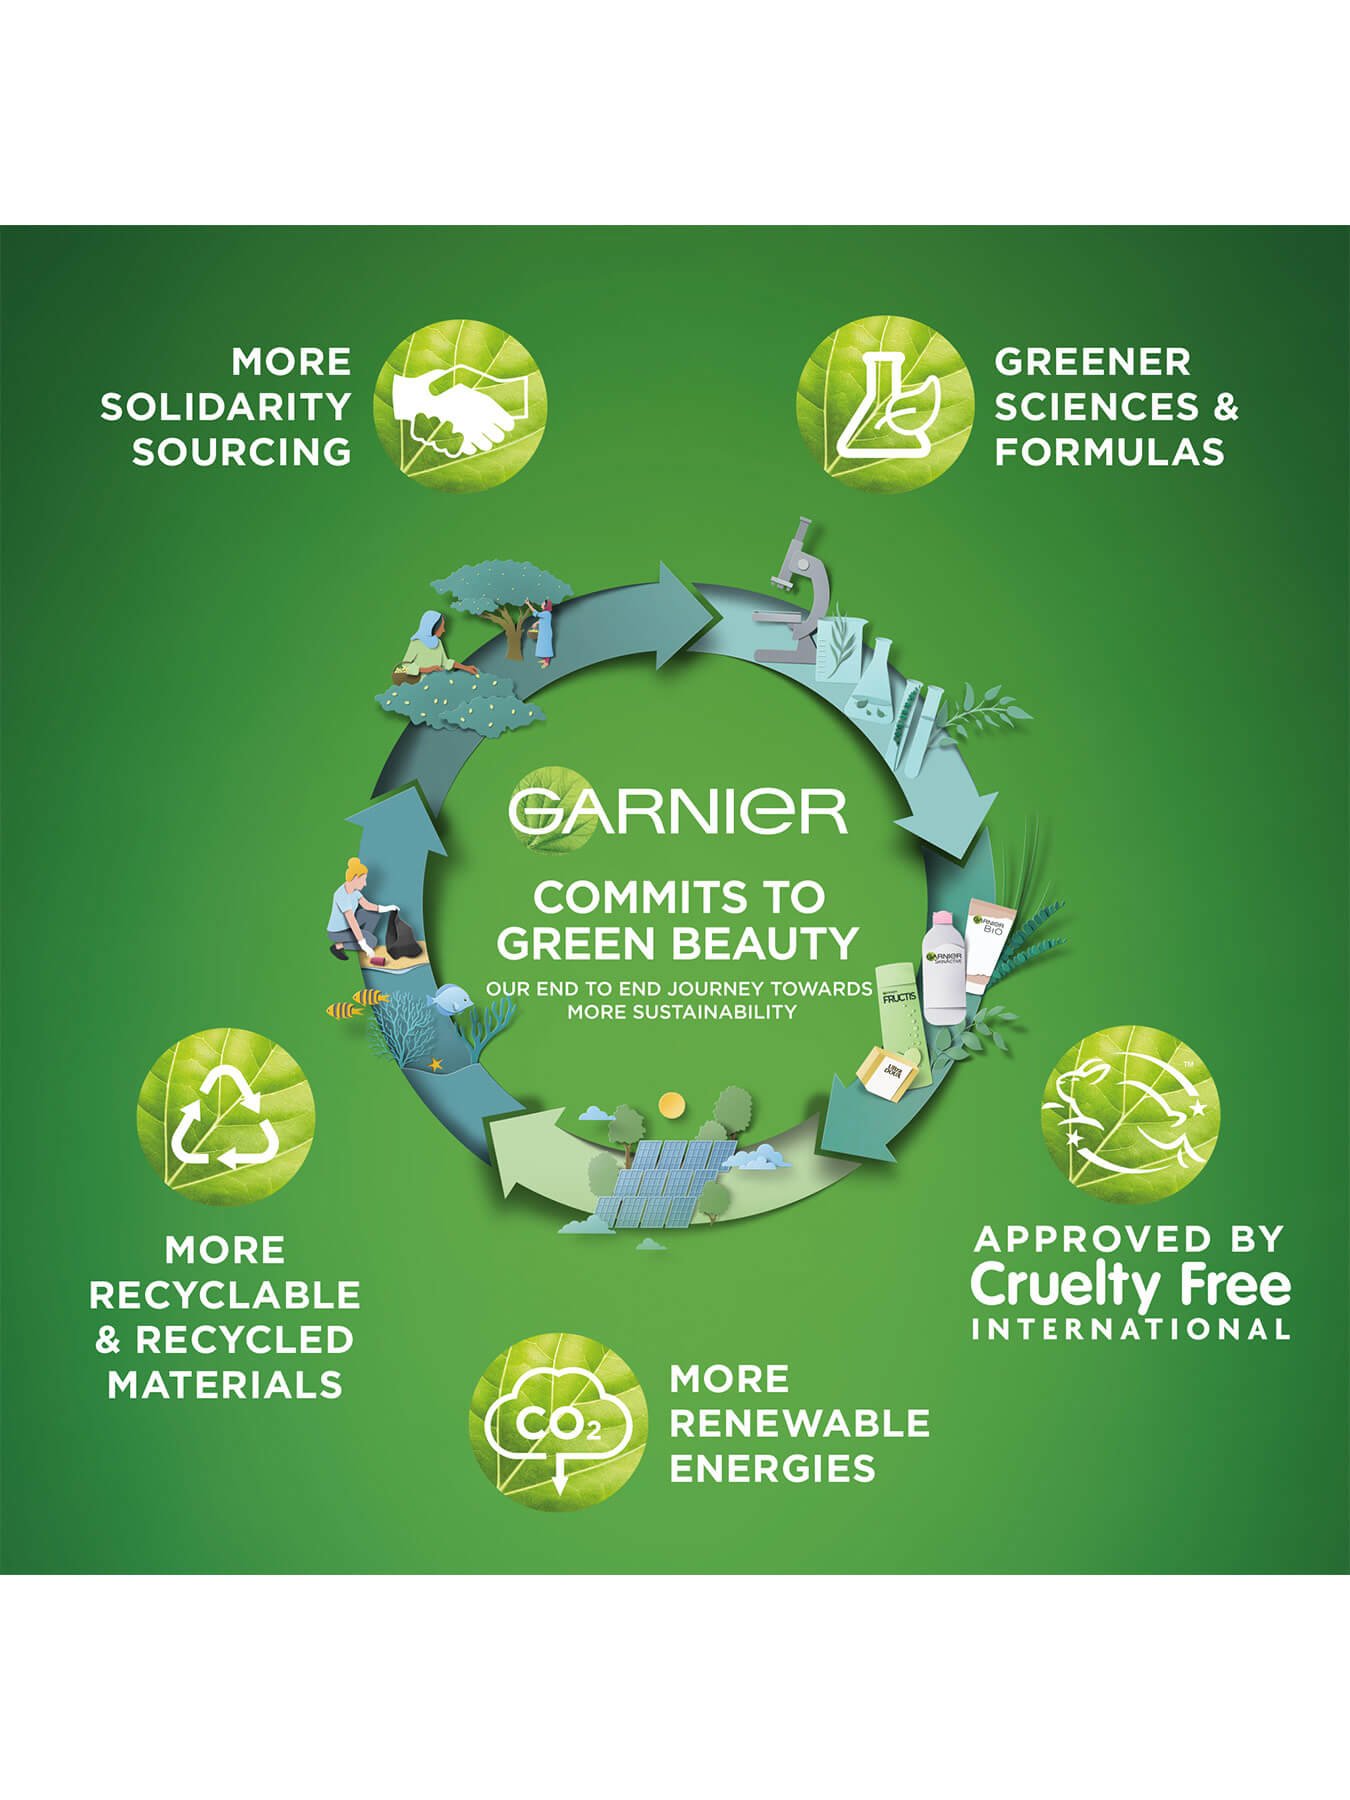 Garnier's 5 commitments